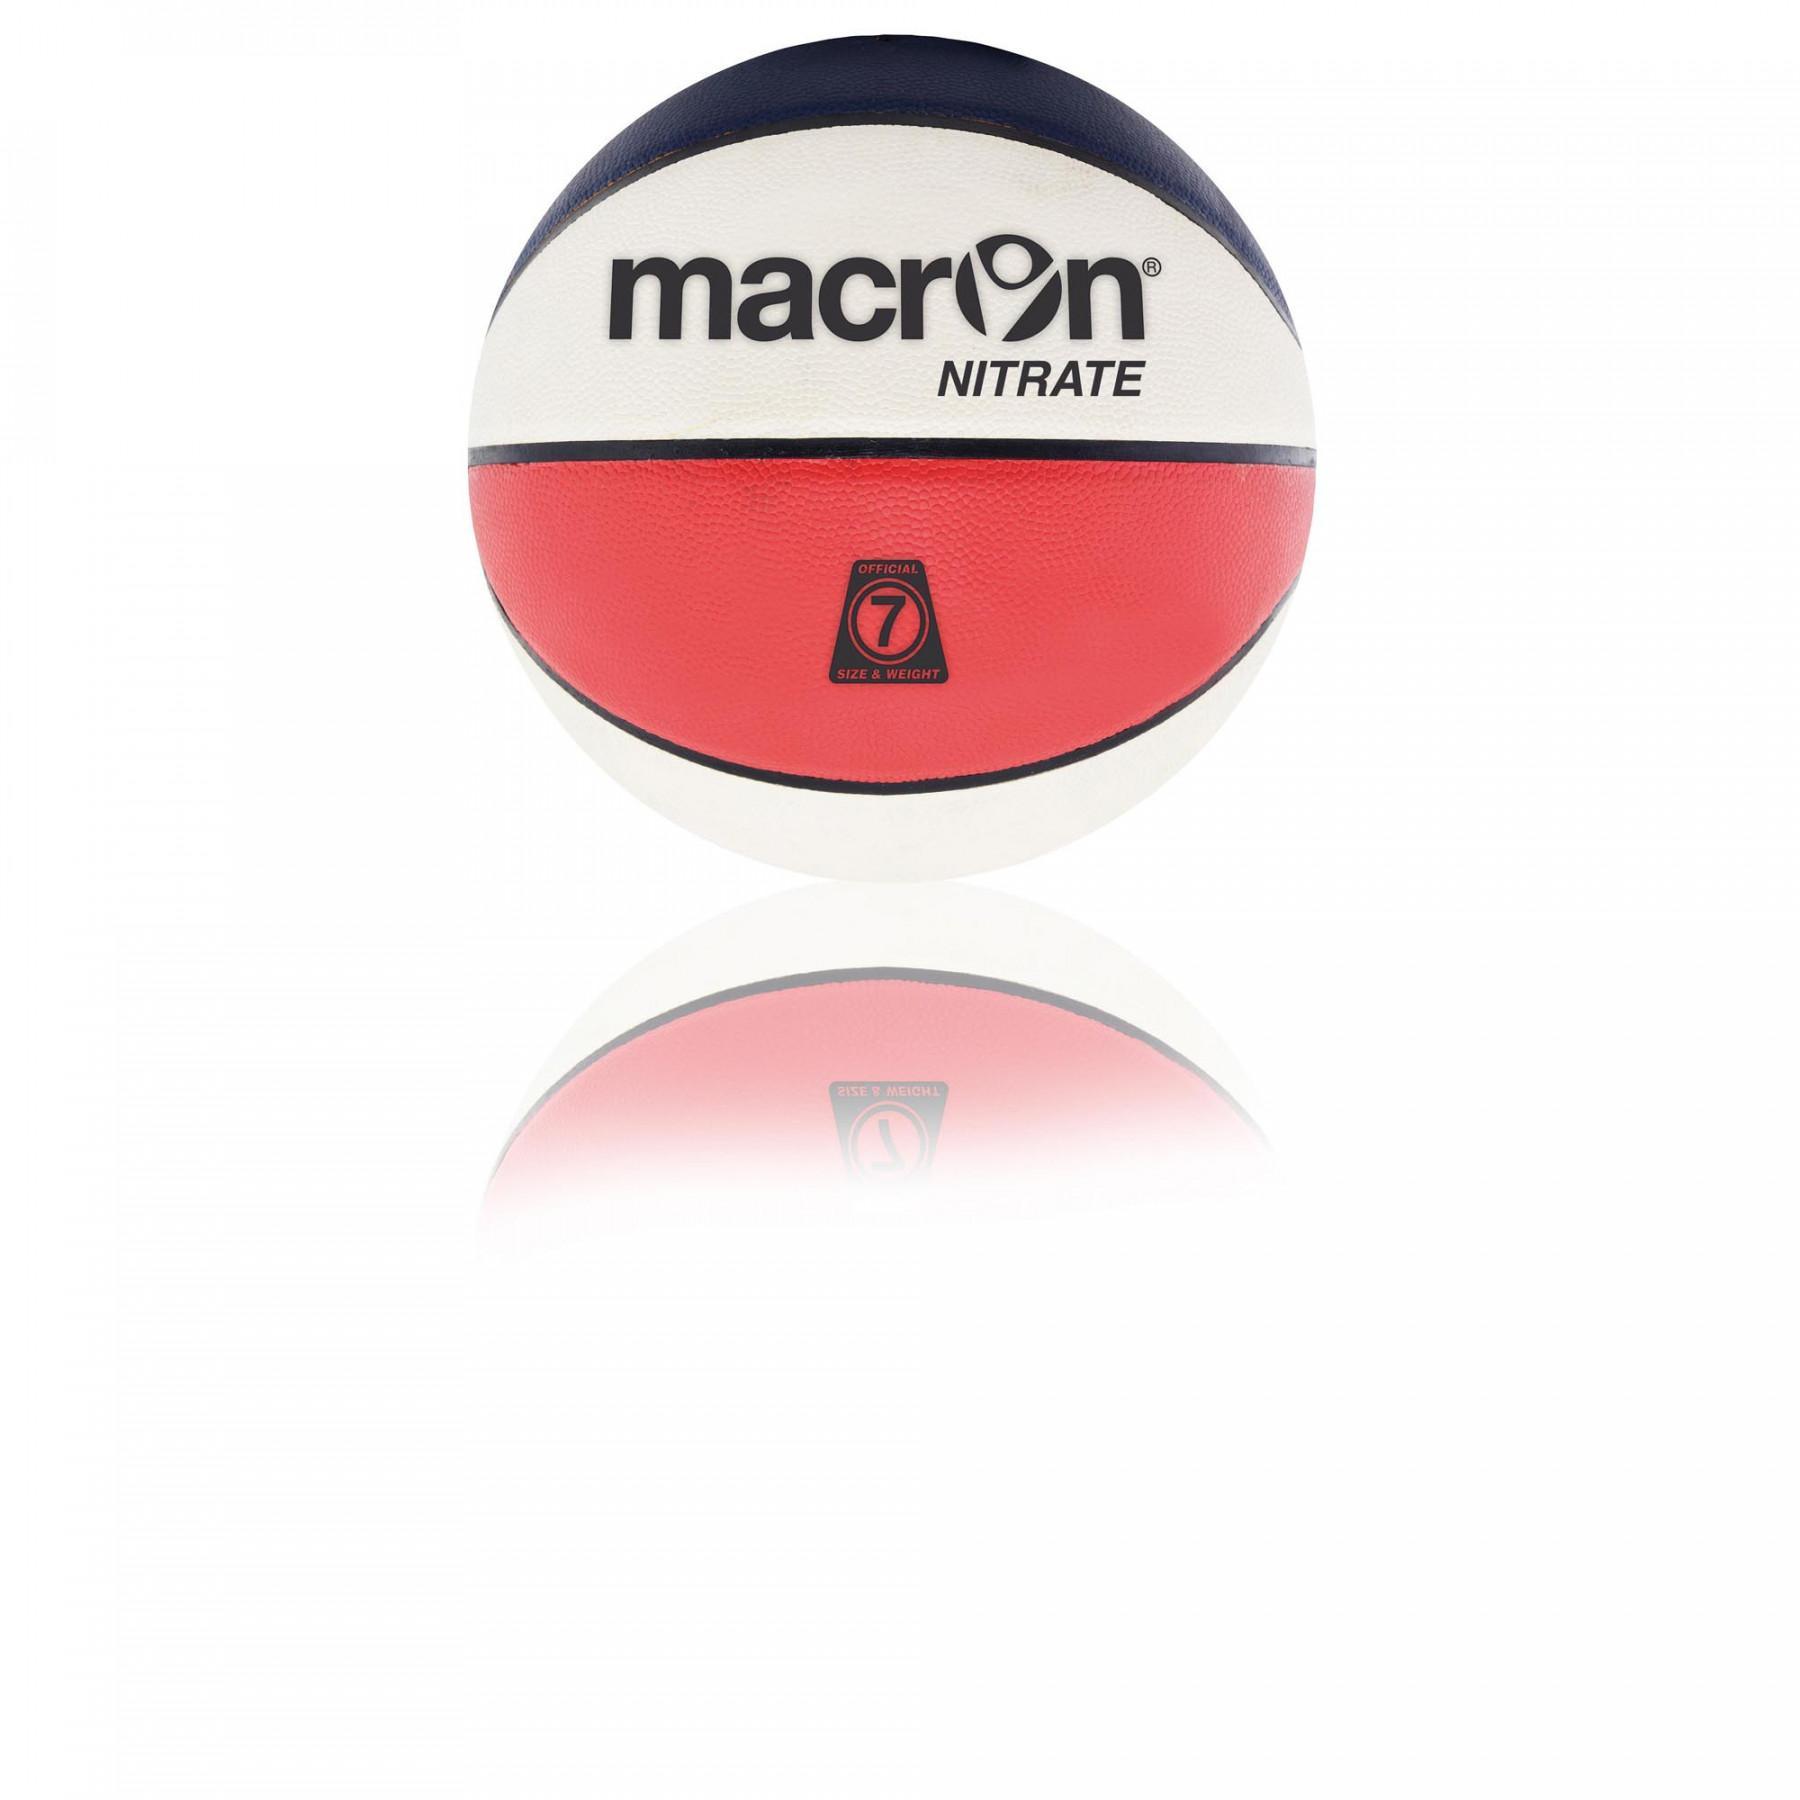 Basketball Macron Nitrate size 6